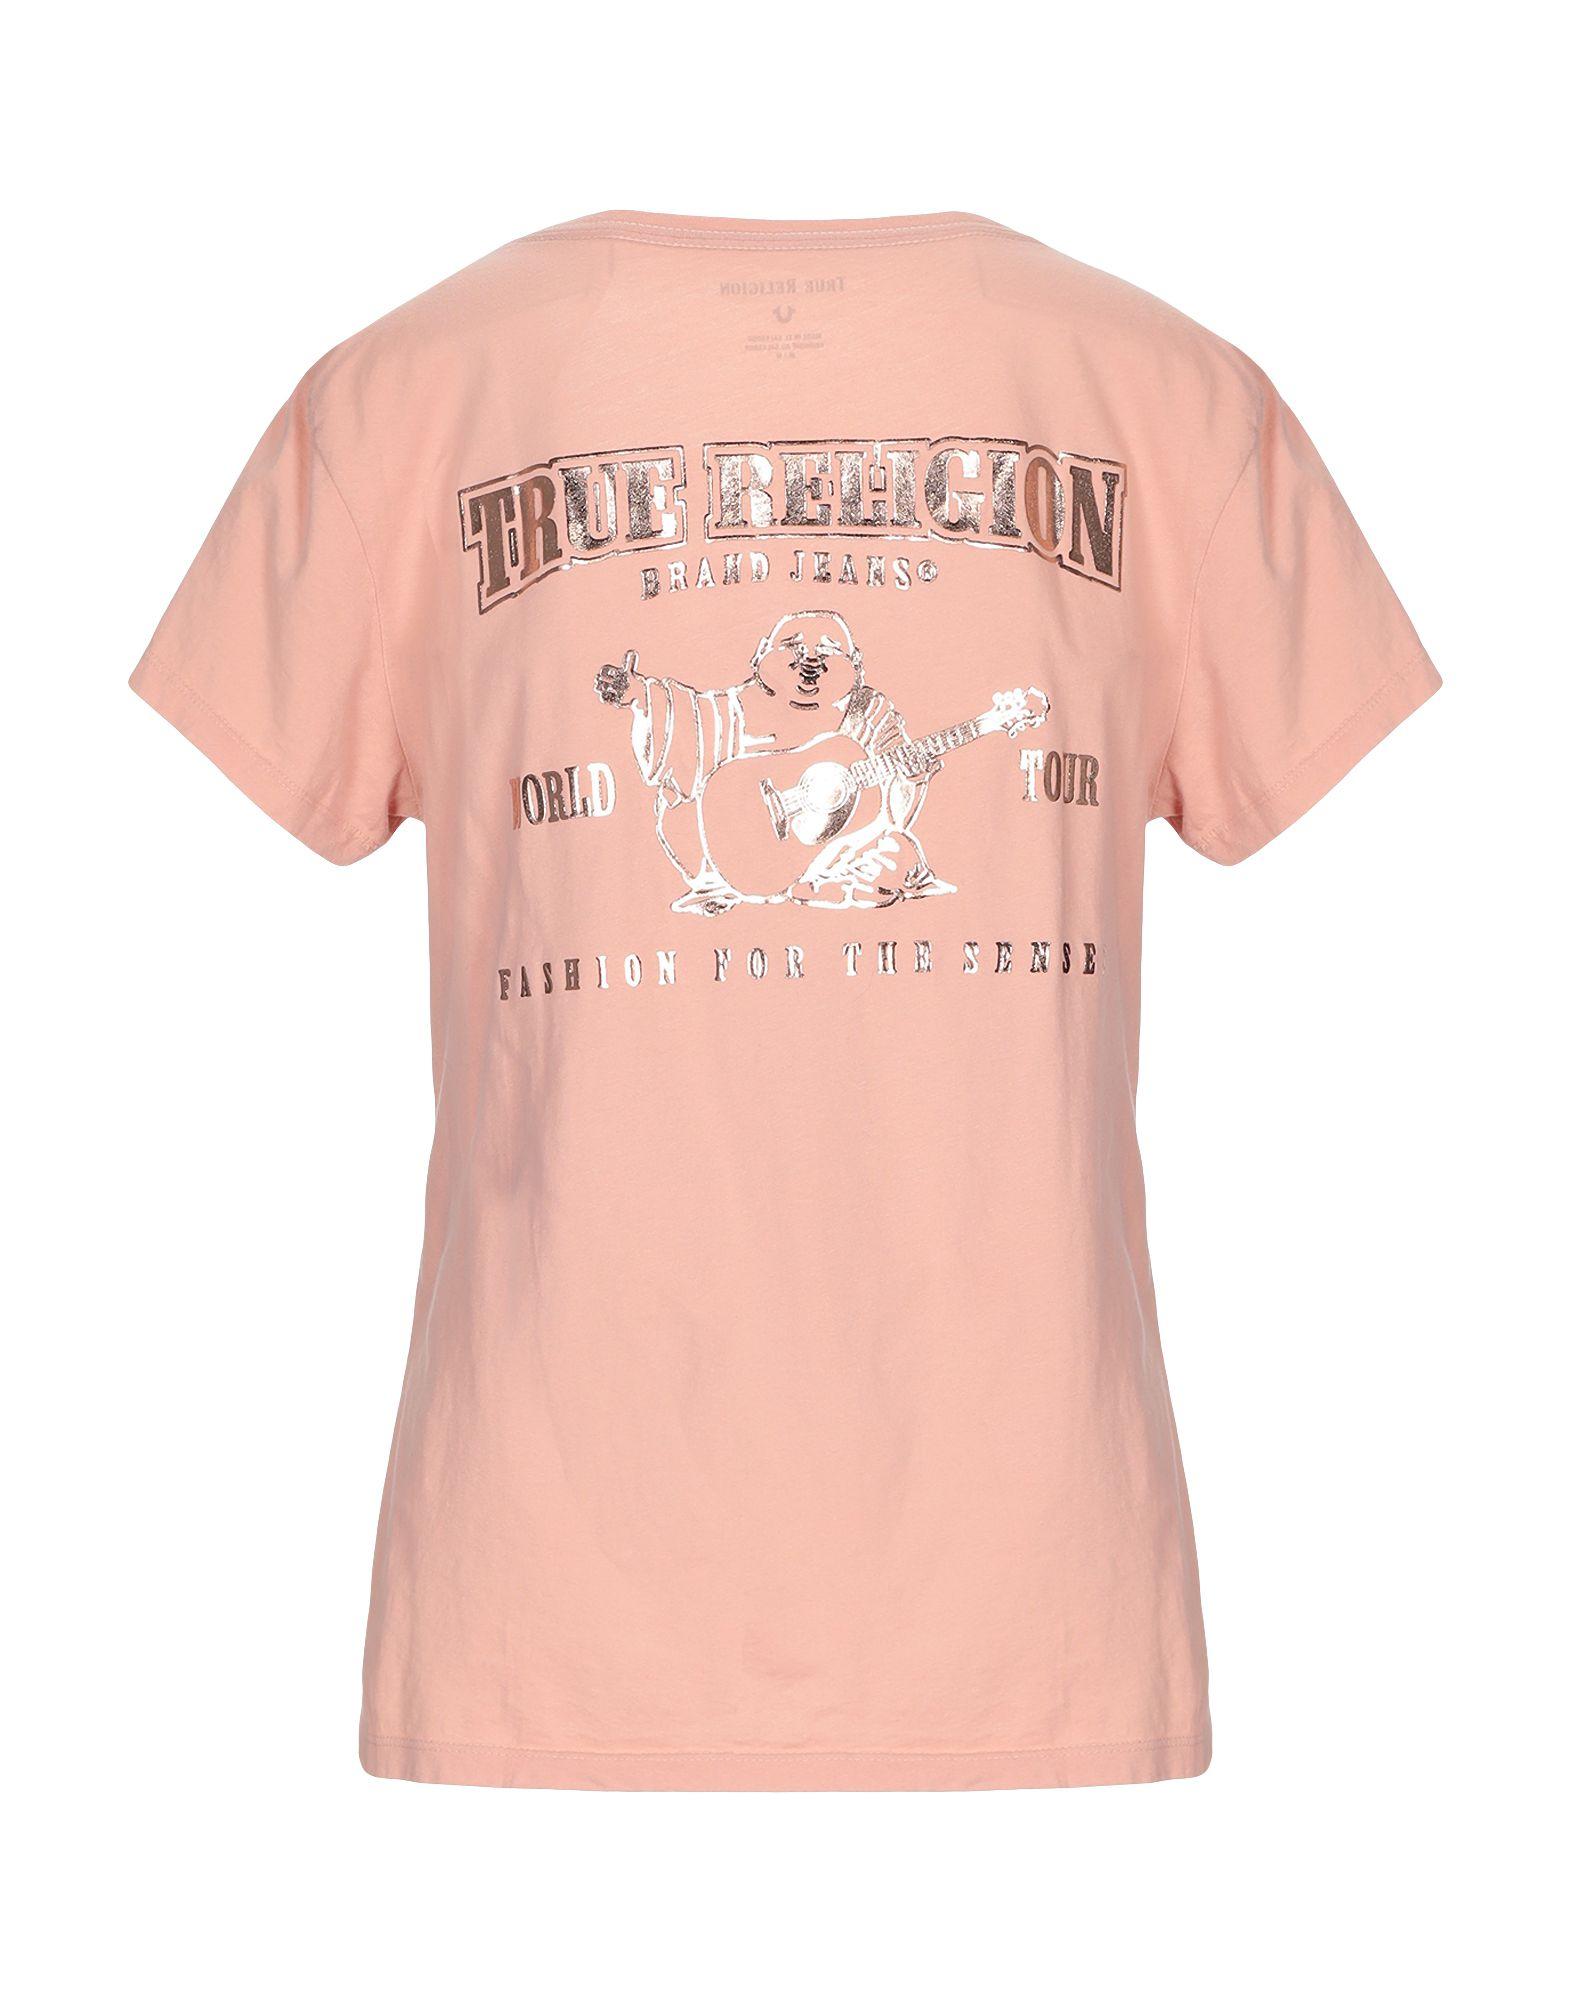 True Religion Cotton T-shirt in Pink - Lyst